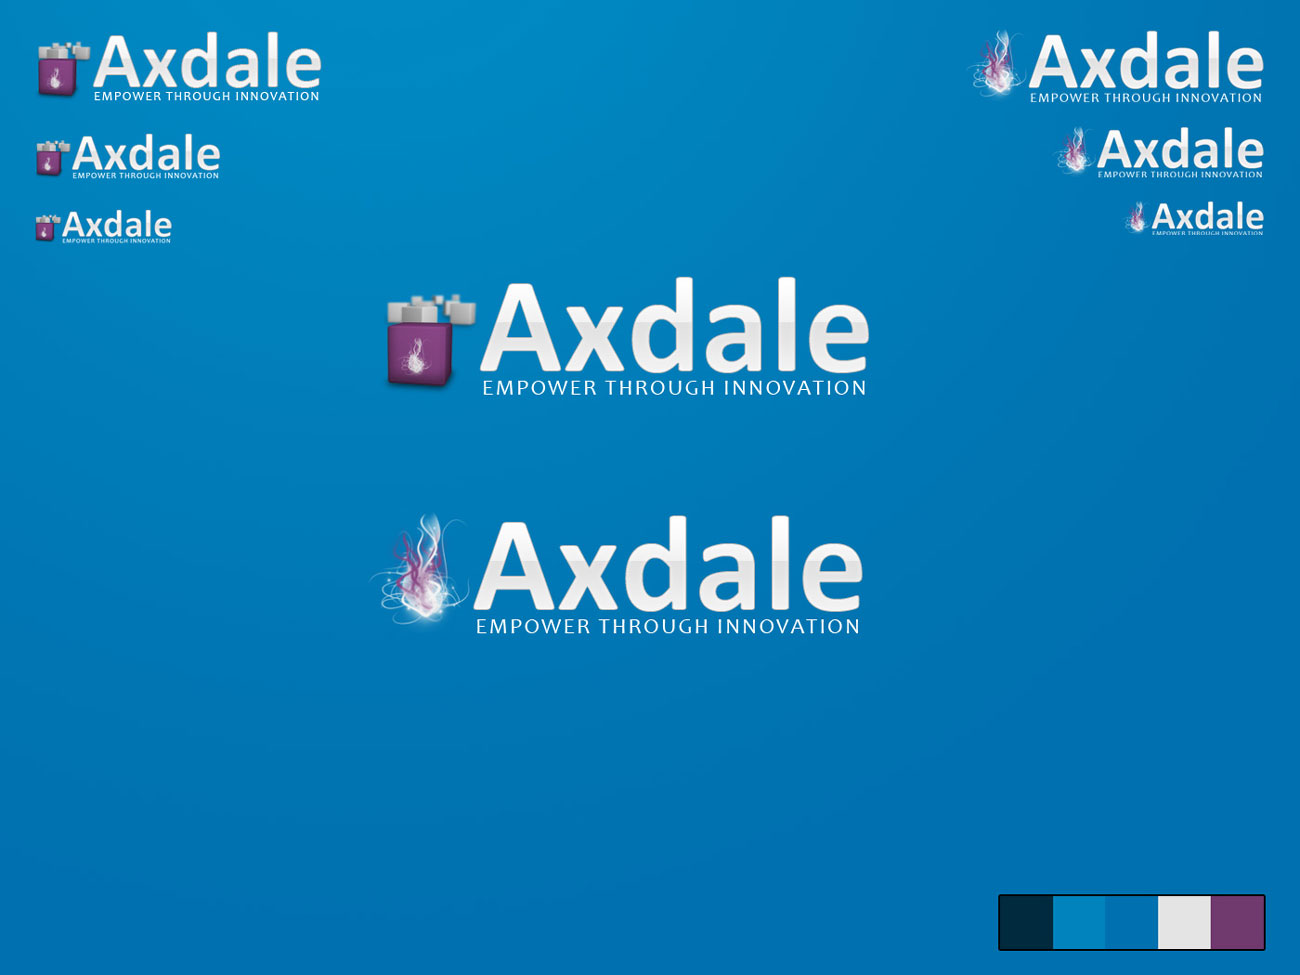 Axdale logo